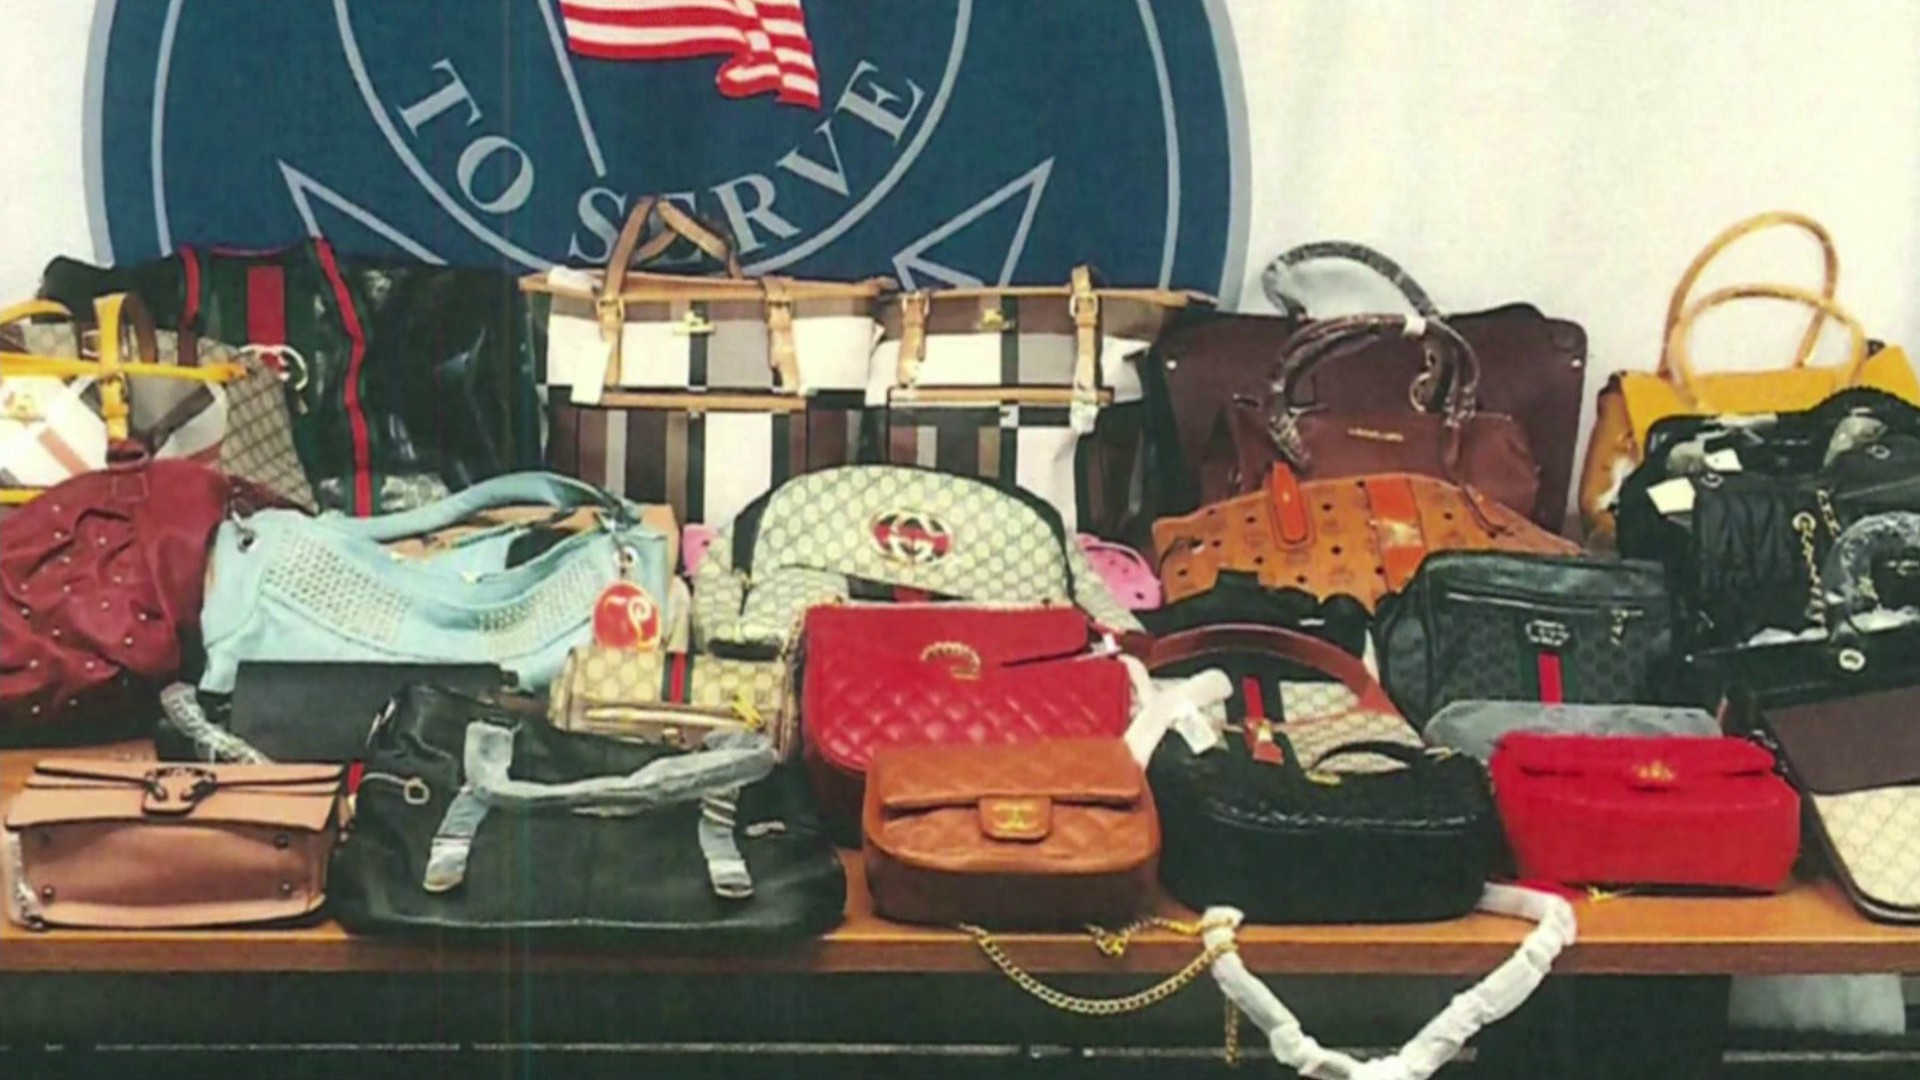 Get Caught Up: Inside the massive fake designer goods bust in Warren